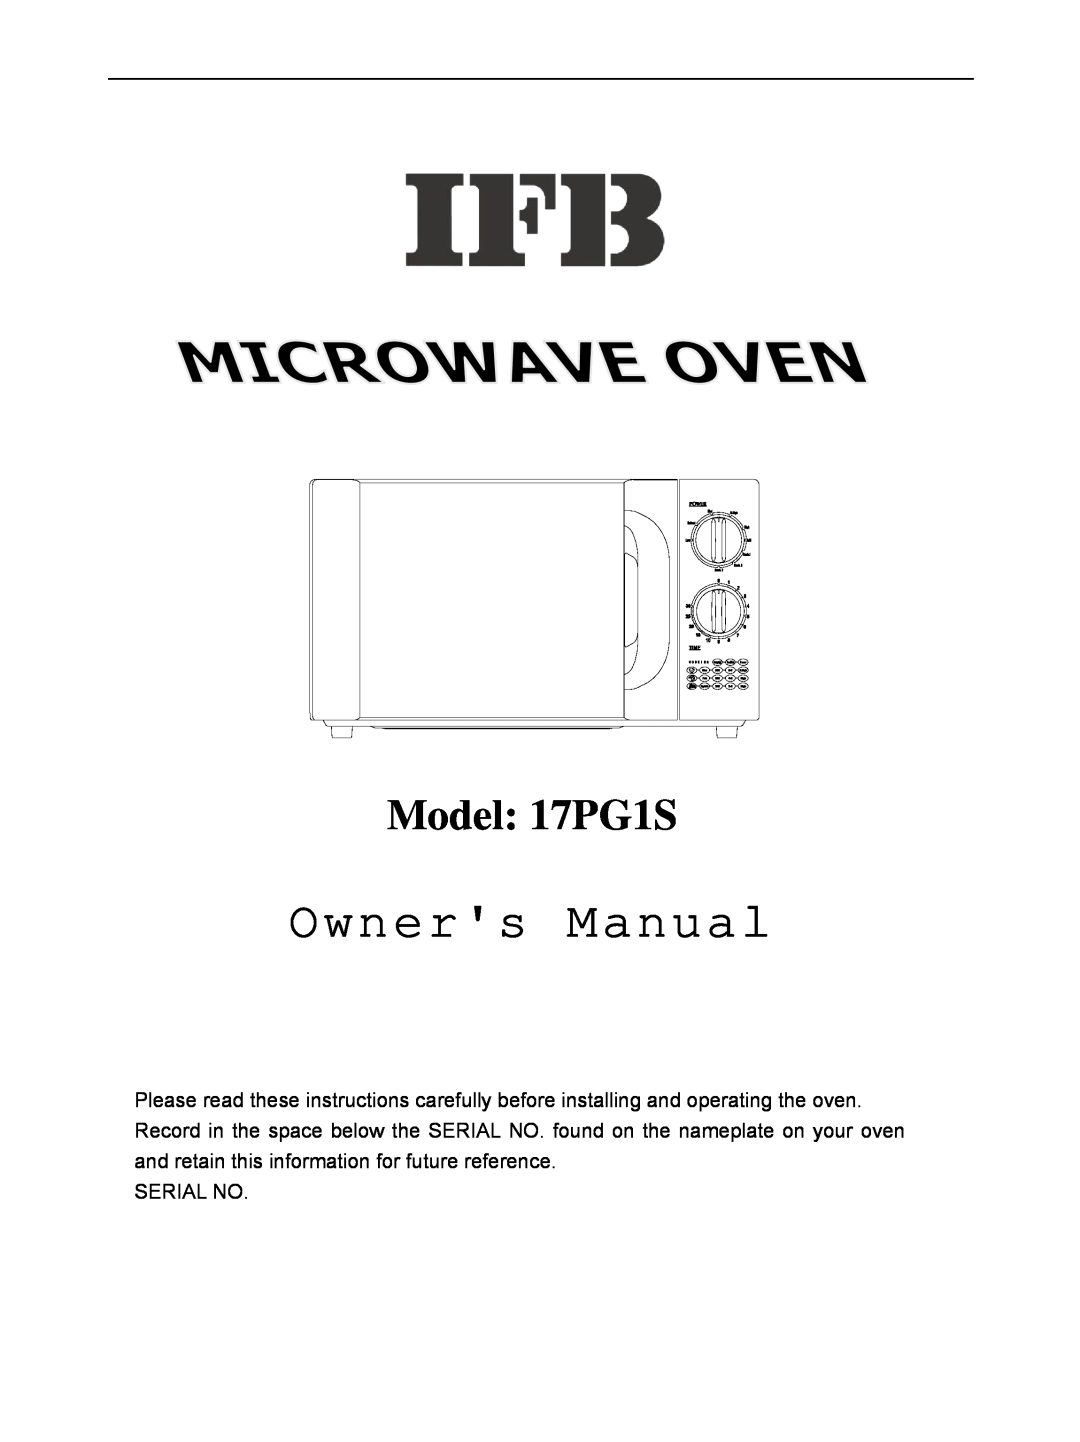 IFB Appliances owner manual Model 17PG1S, Serial No 